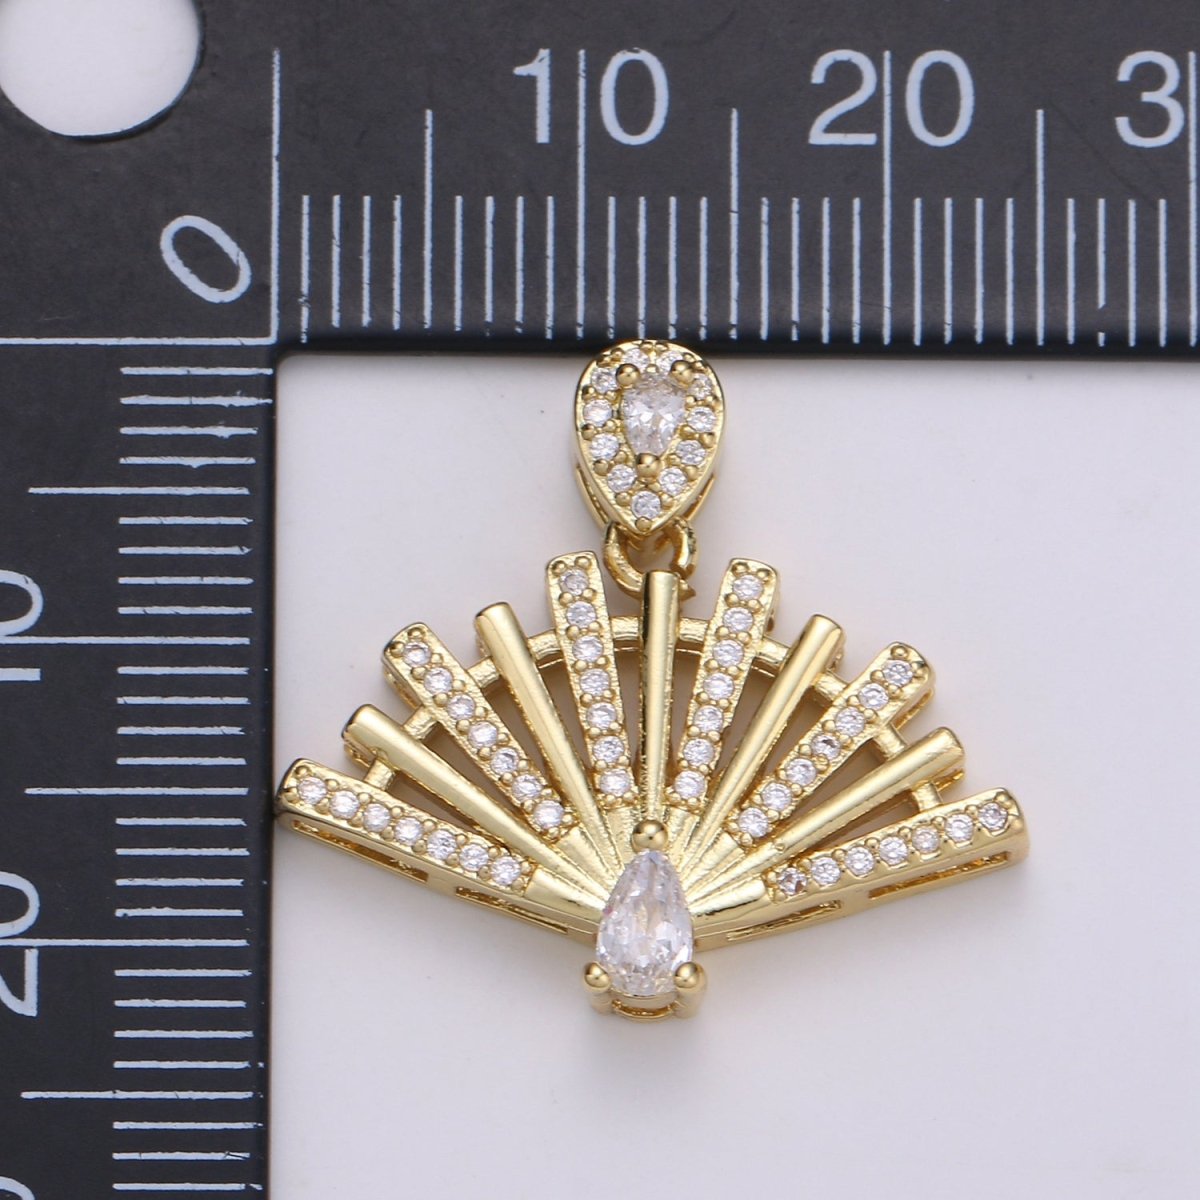 25x23mm Wholesale Gold-Filled Fan Pendant Charm with Rhinestones, Pendant for Necklace Bracelet Anklet Making J-147 - DLUXCA